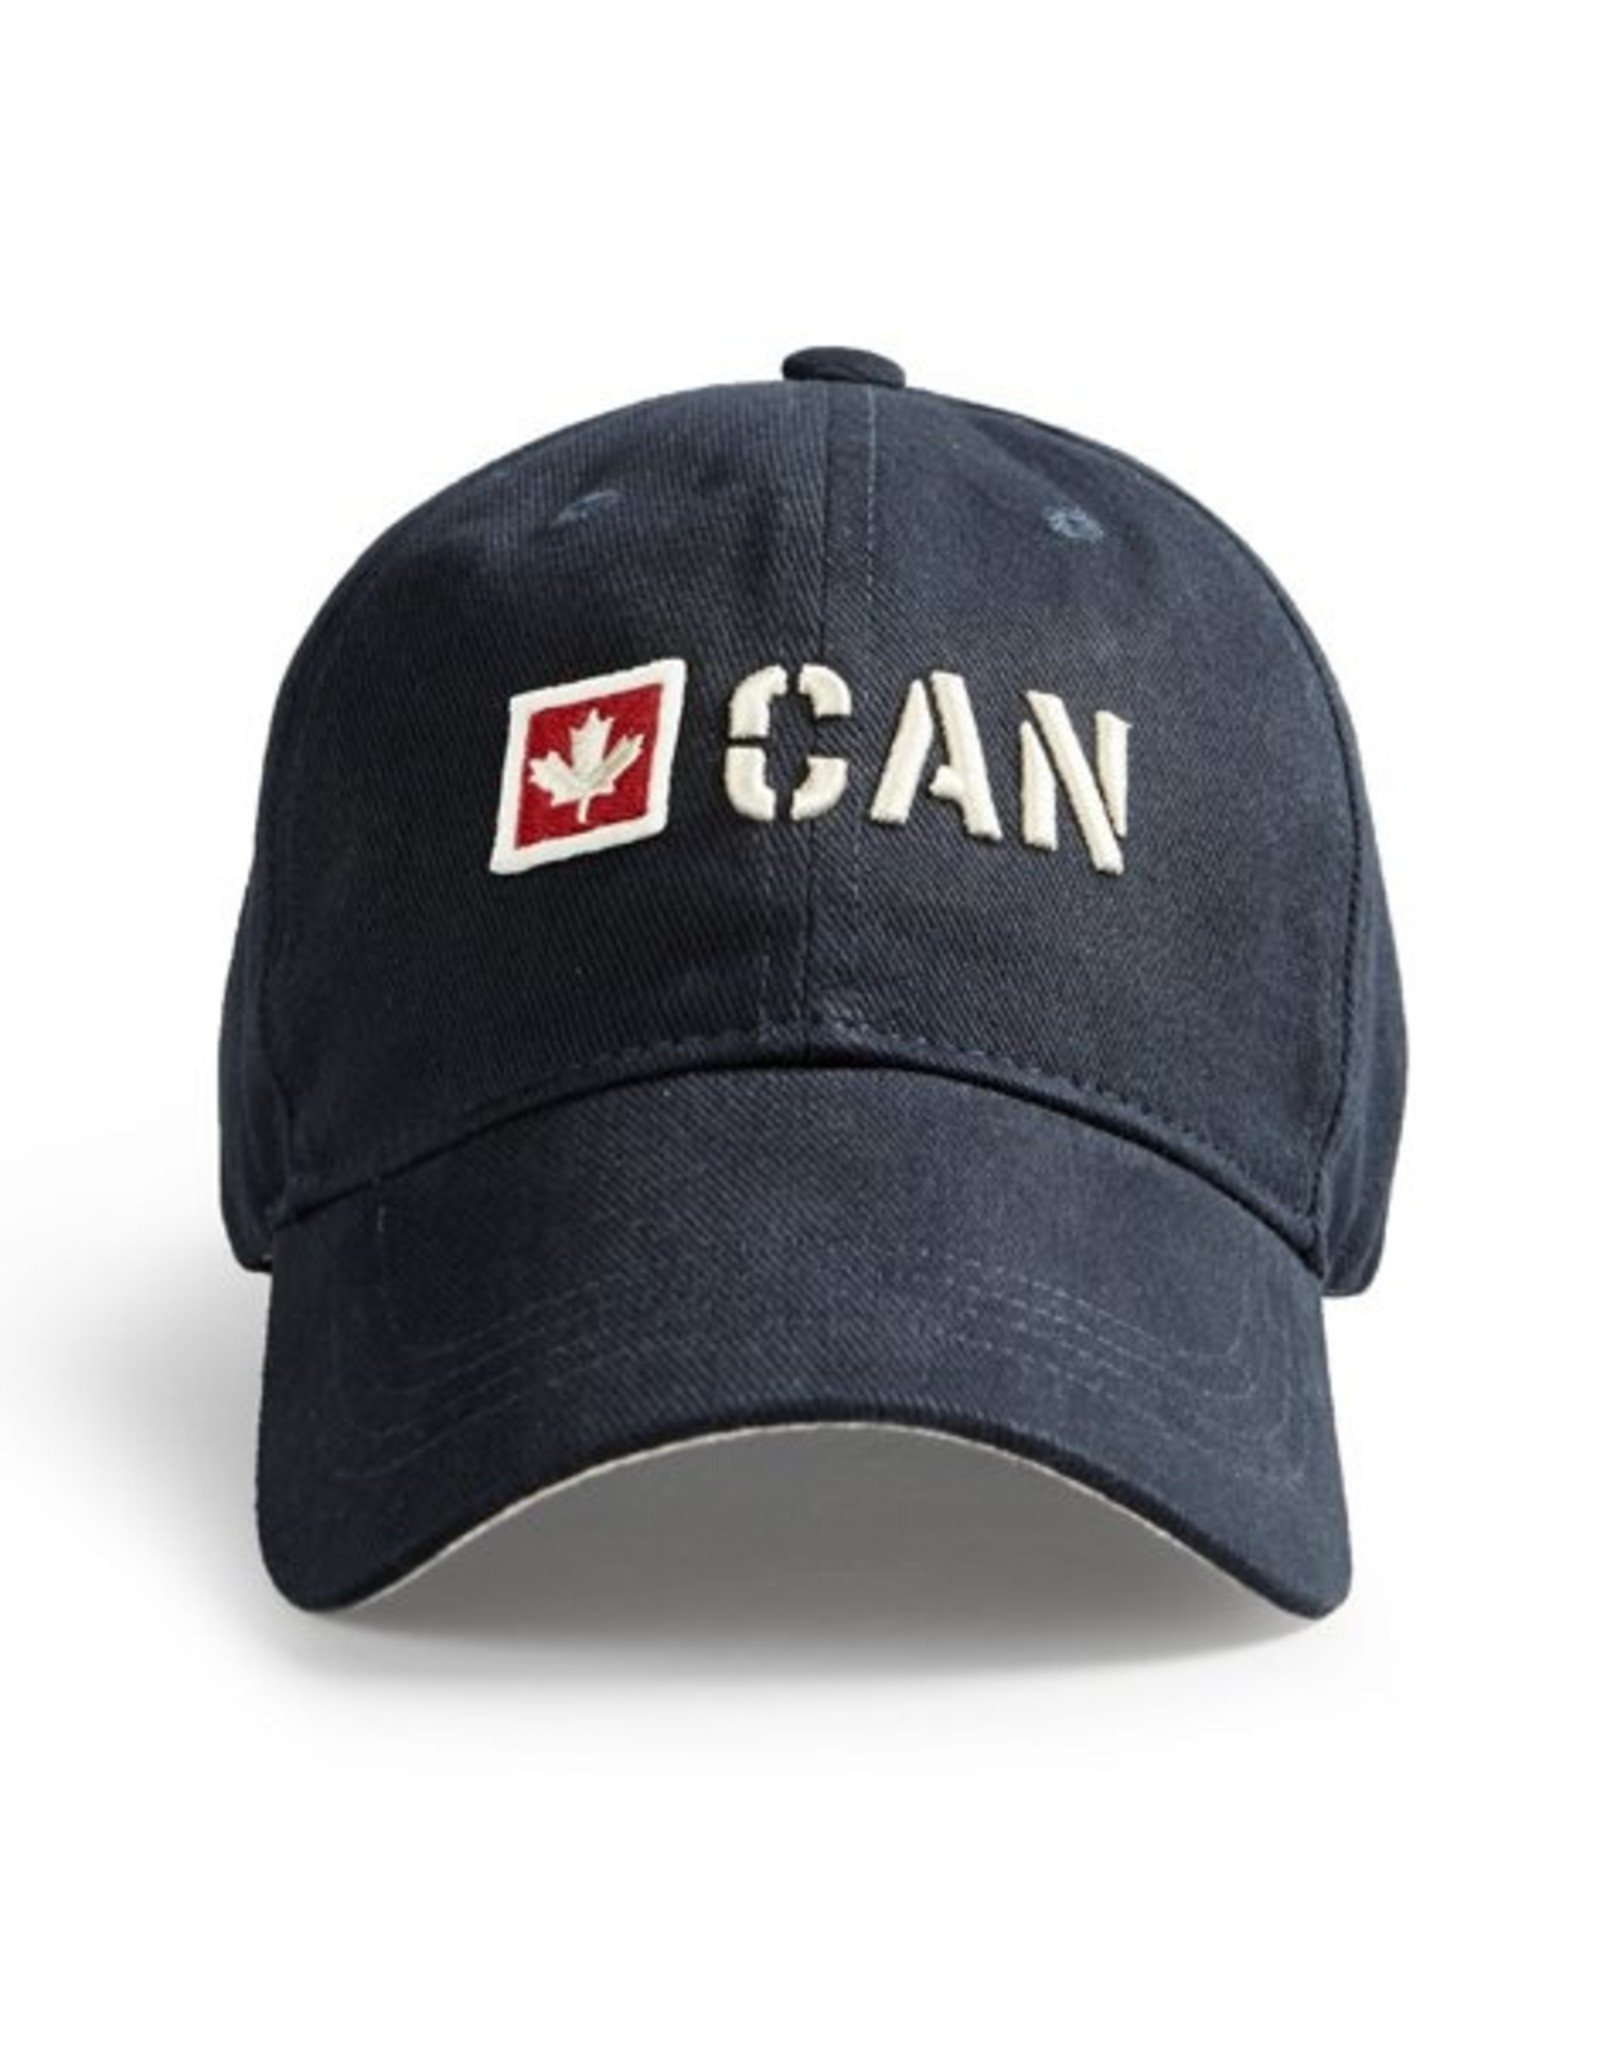 RED CANOE CANADA STENCIL CAP-NAVY